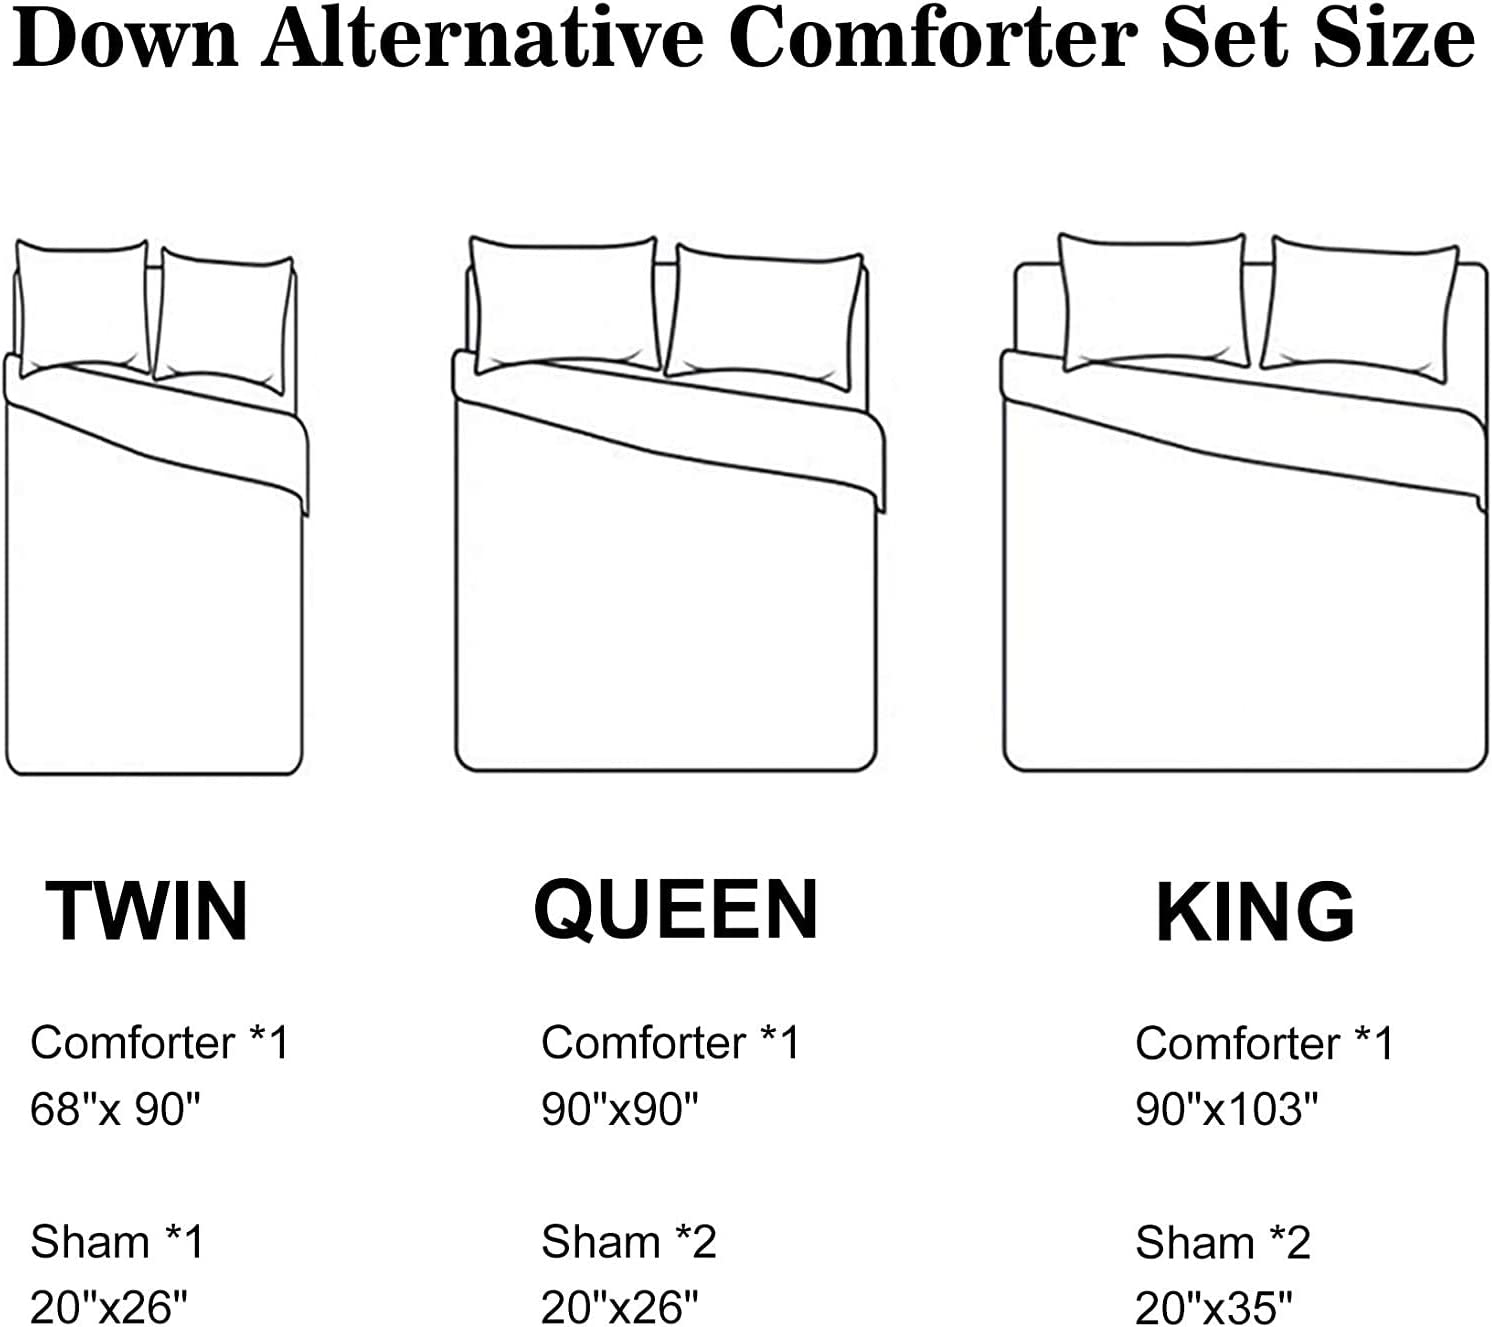 Shatex 3 Piece Comforter Bedding Set-Pompom Fringe Bedding Comforter Set, Ultra Soft Polyester Bedding Comforters